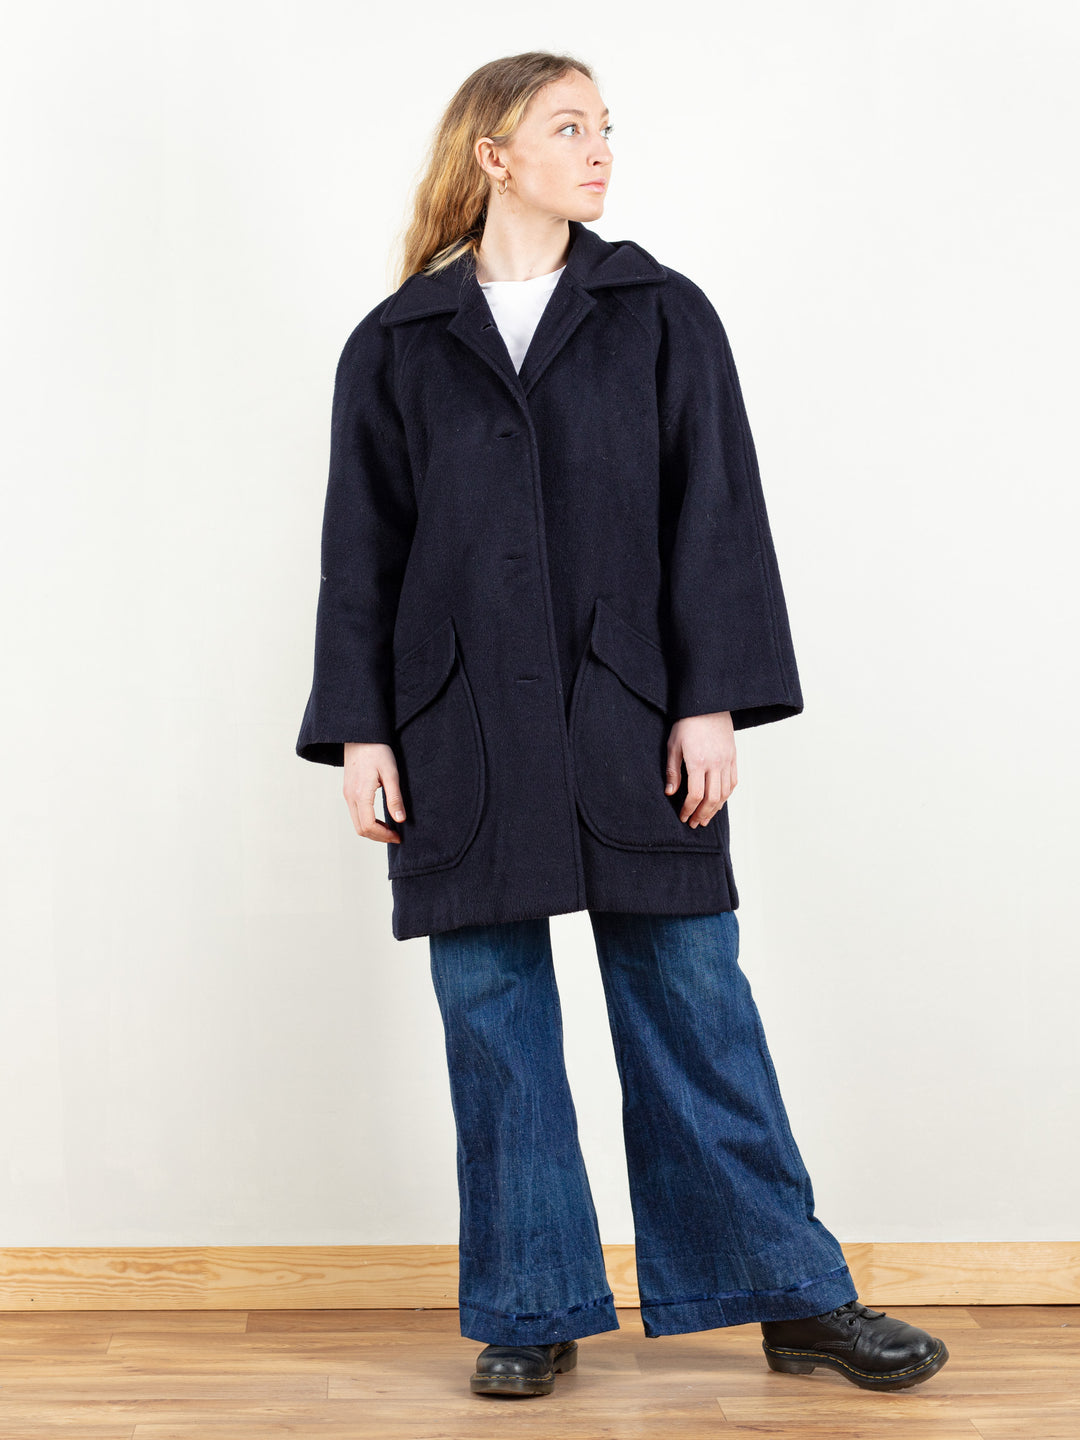 Blue Wool Coat women vintage 80s winter coat wool blend short coat mod outerwear bold winter coat vintage clothing size large